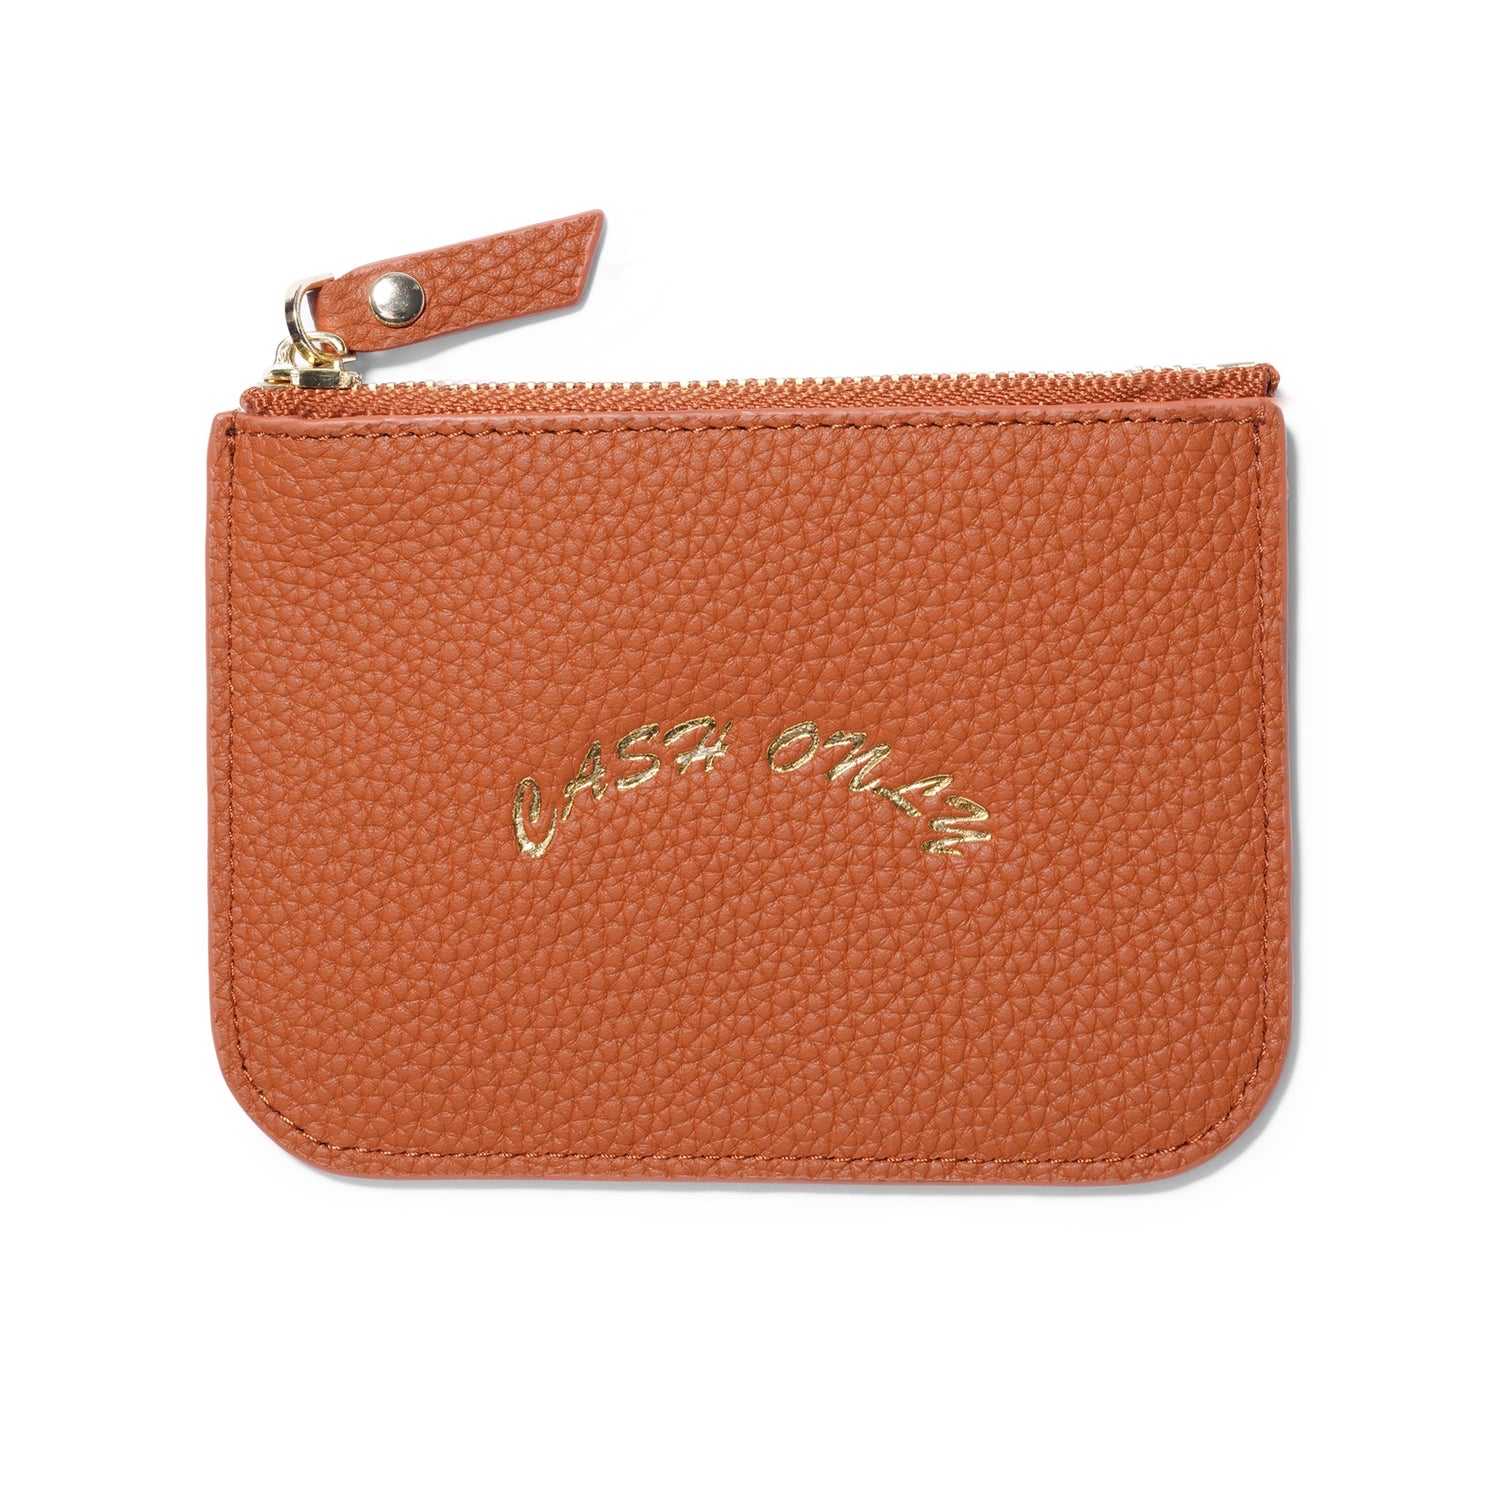 Leather Zip Wallet, Tan